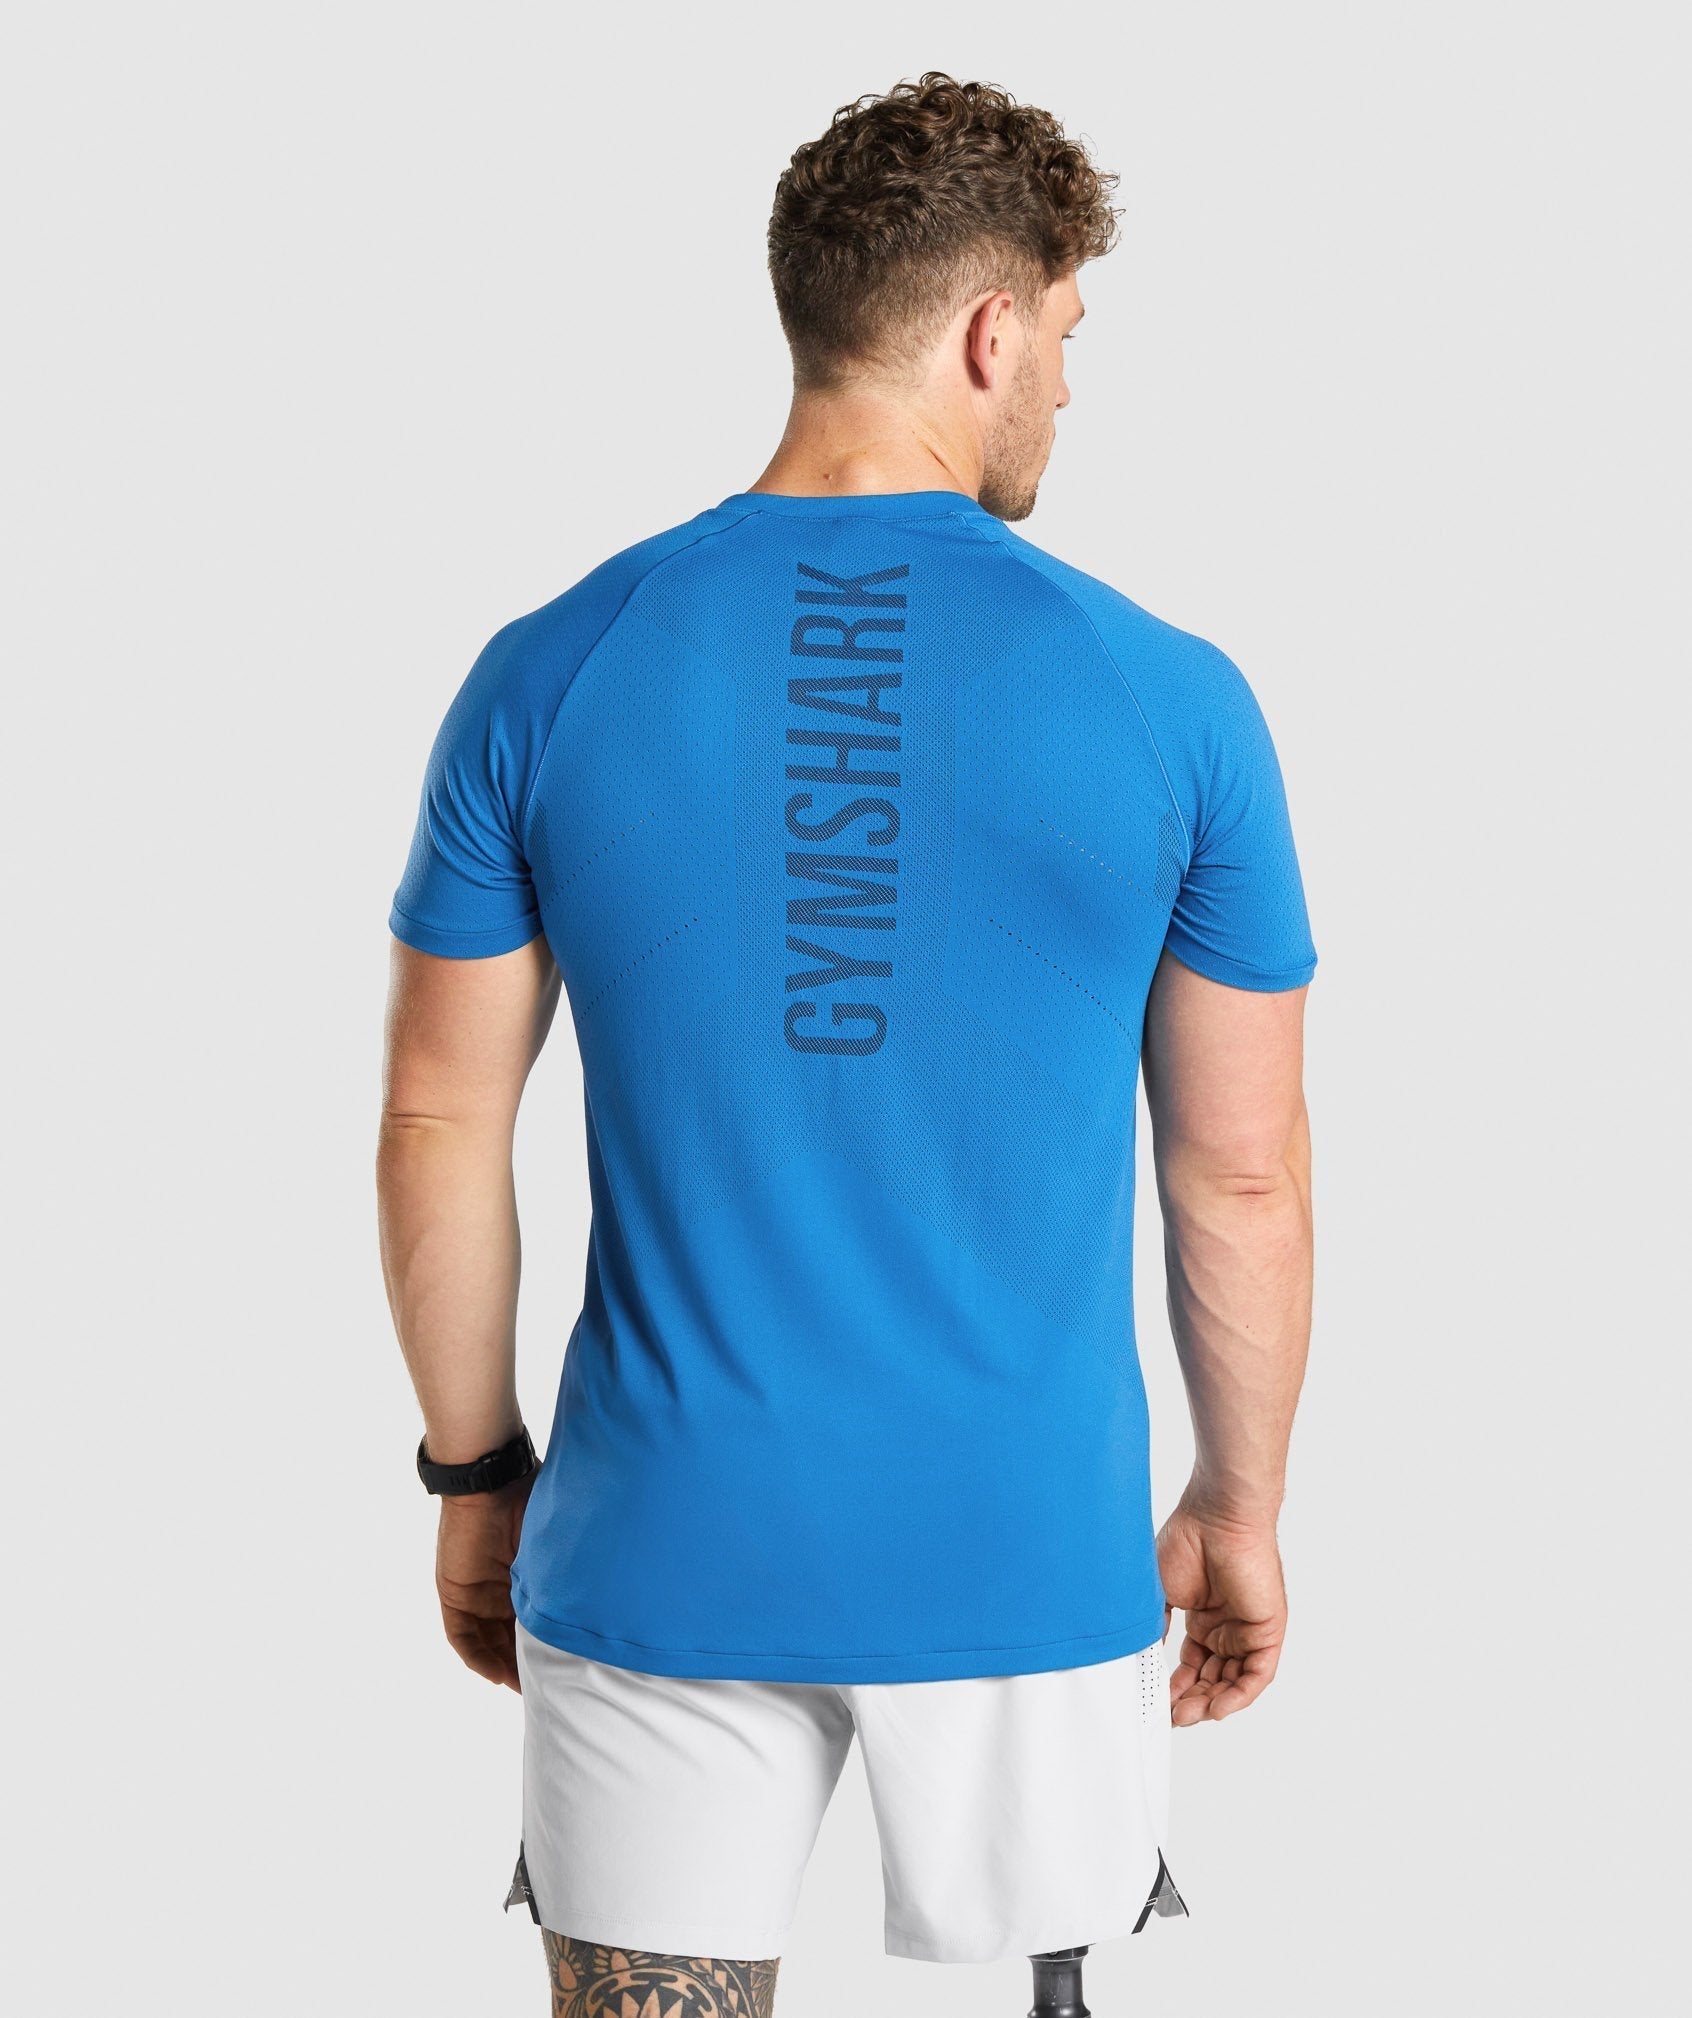 Gymshark Apex Perform T-Shirt - Black – Client 446 100K products